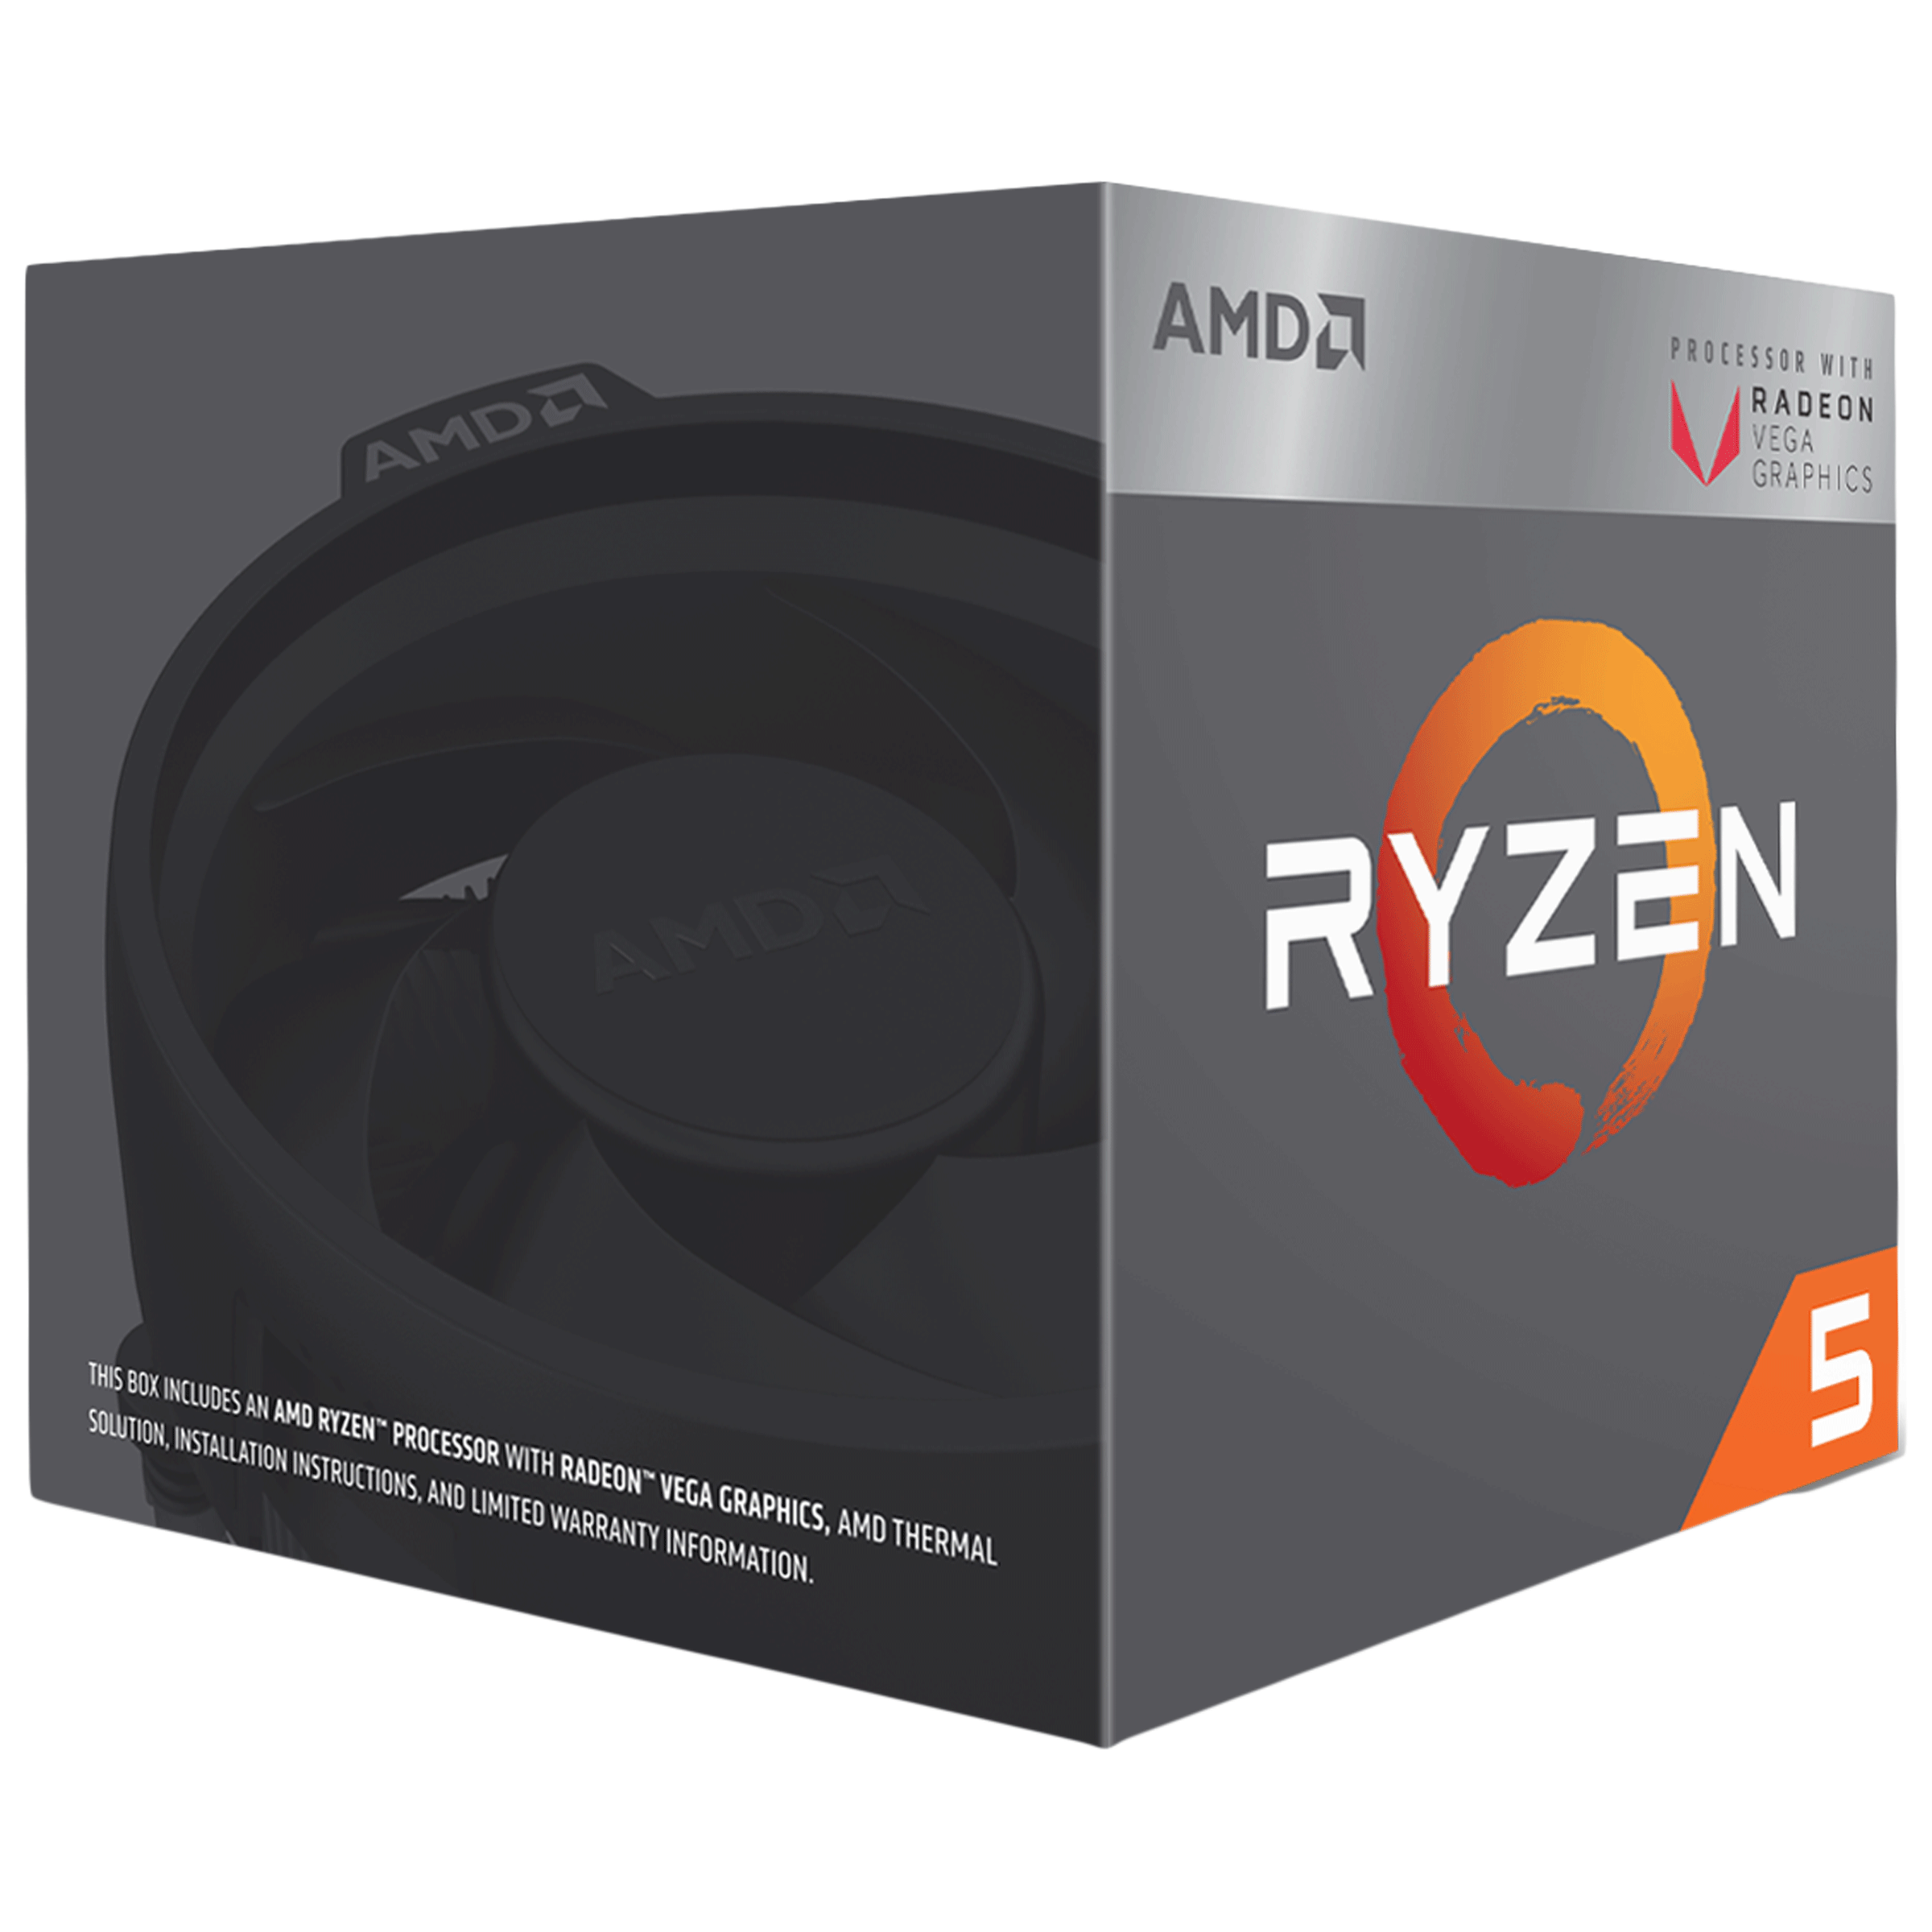 AMD Ryzen 5 Desktop Processor (4 Cores, 3.7 GHz, Unlocked For Overclocking, 3400G, Silver)_1